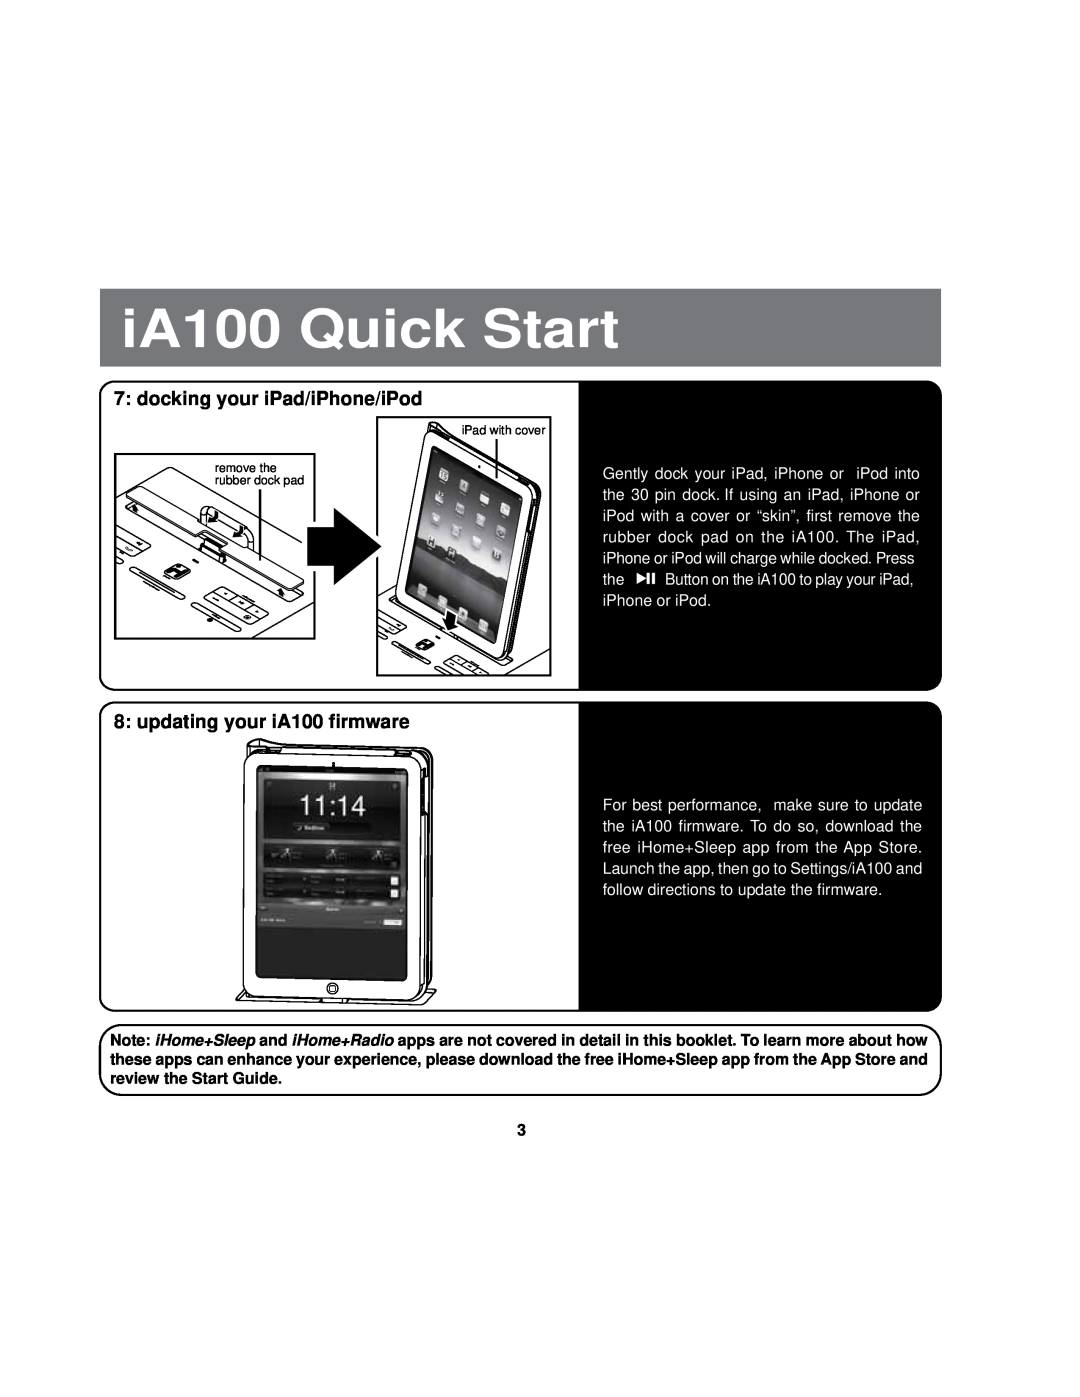 iHome manual docking your iPad/iPhone/iPod, updating your iA100 firmware, iA100 Quick Start 